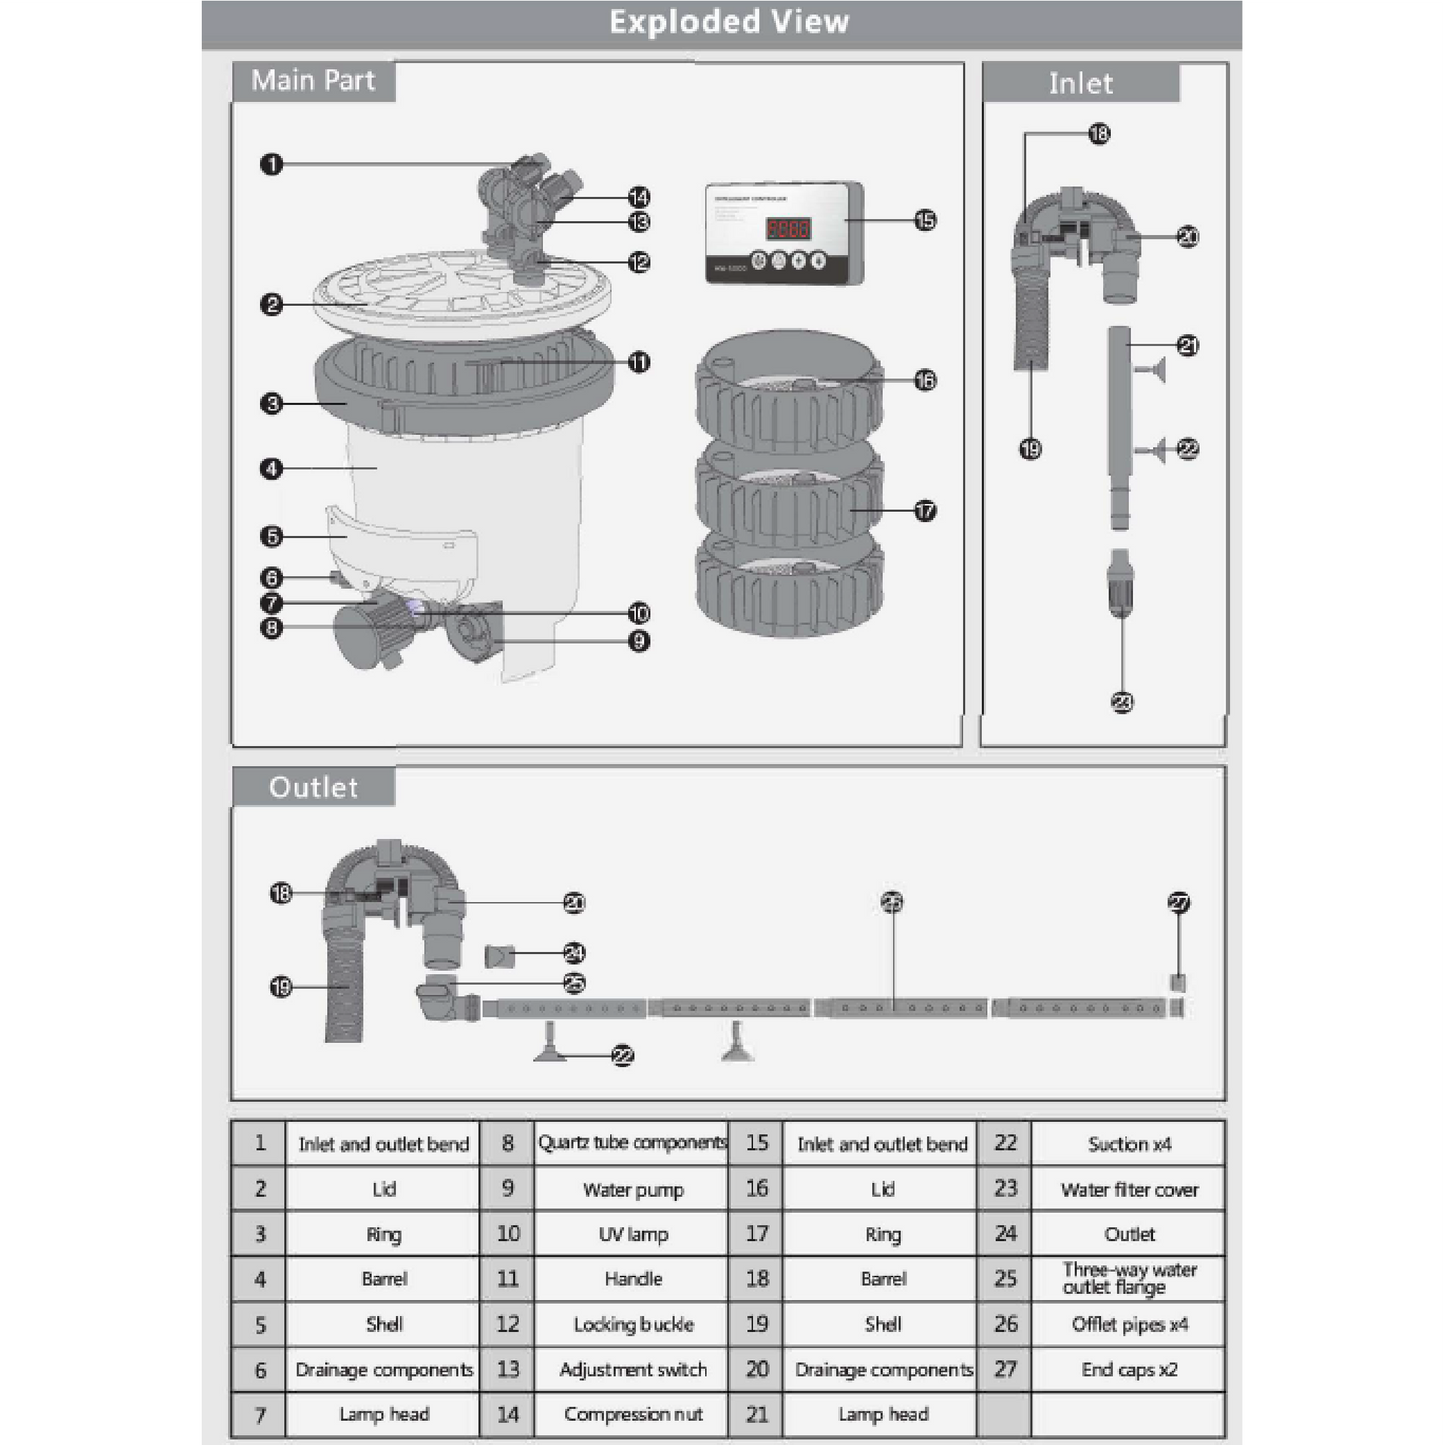 SUNSUN Genuine HW-5000 external Canister filter replacement input & output set